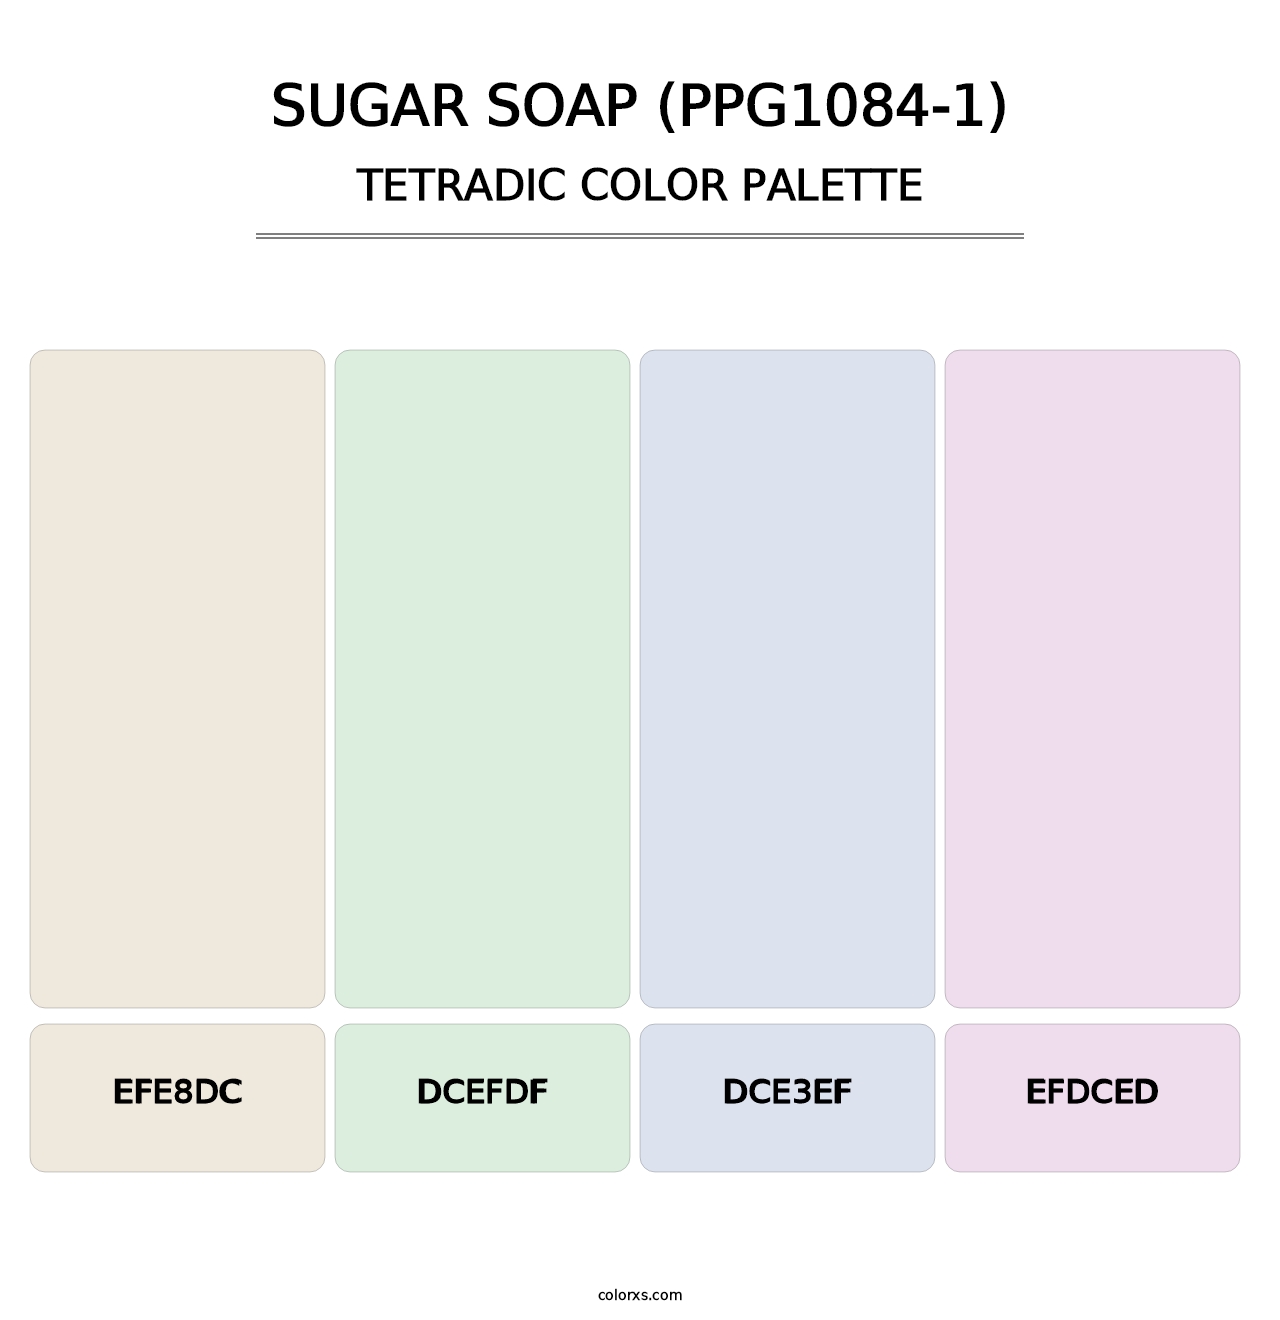 Sugar Soap (PPG1084-1) - Tetradic Color Palette